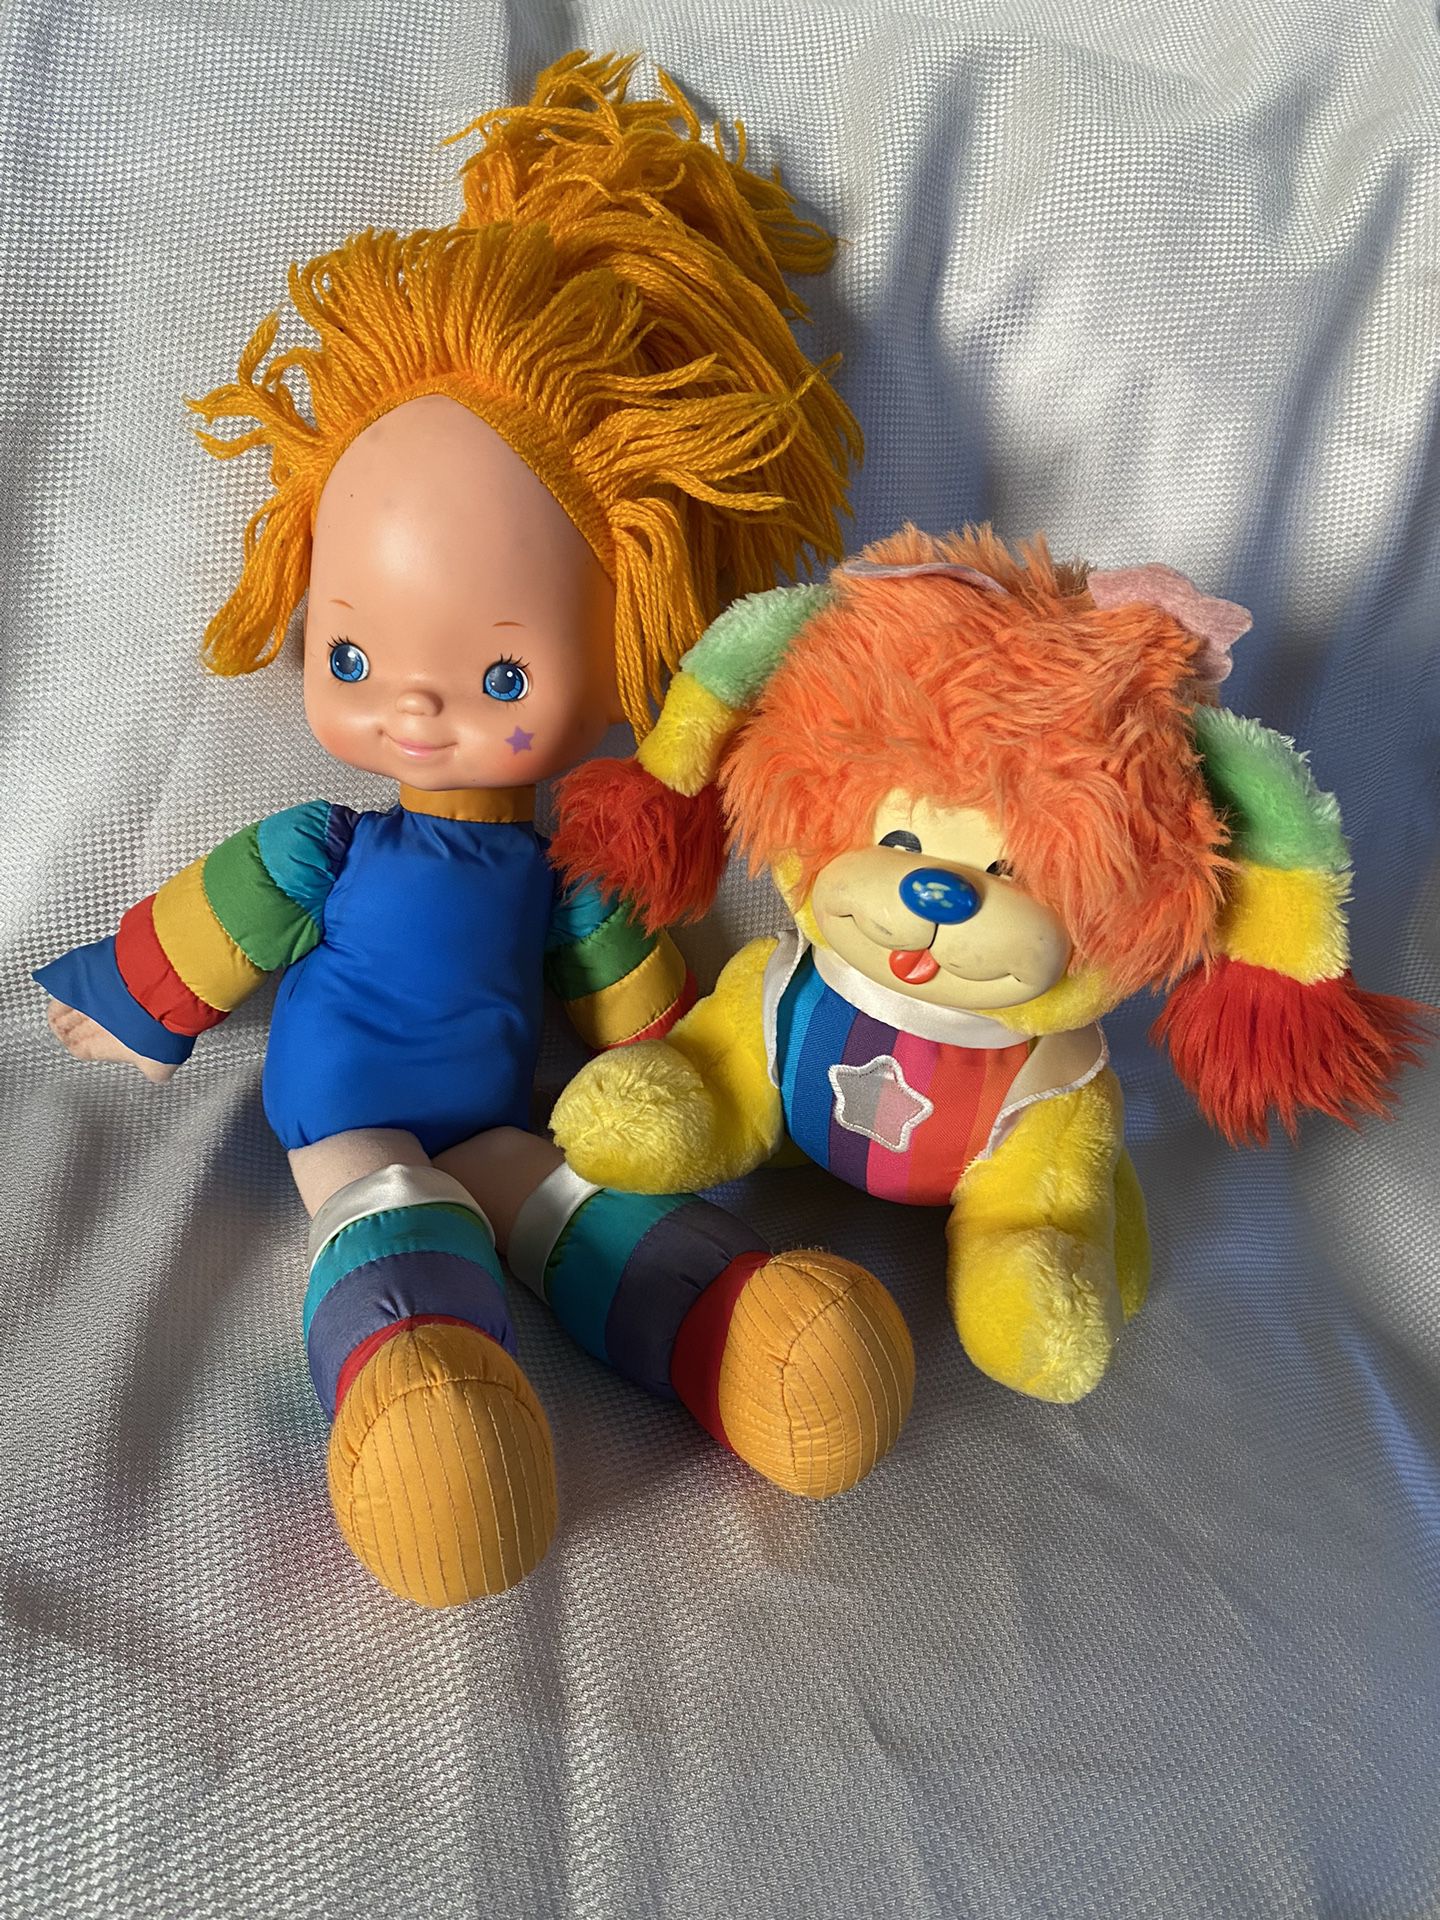 Rainbow Brite vintage dolls